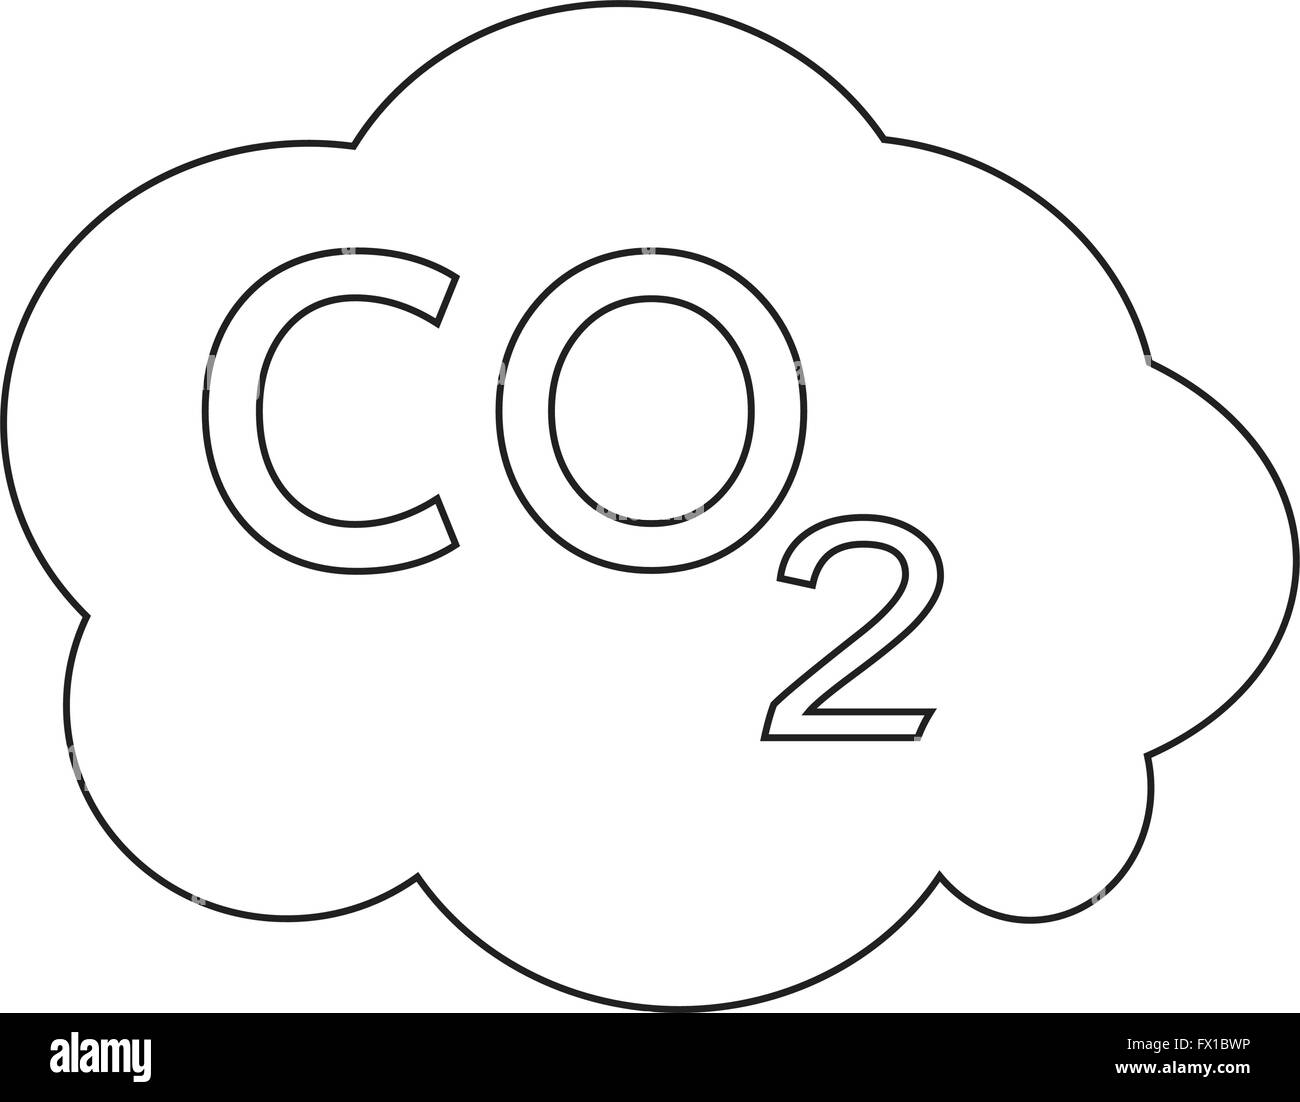 CO2 icon Stock Vector Art & Illustration, Vector Image: 102064194 - Alamy